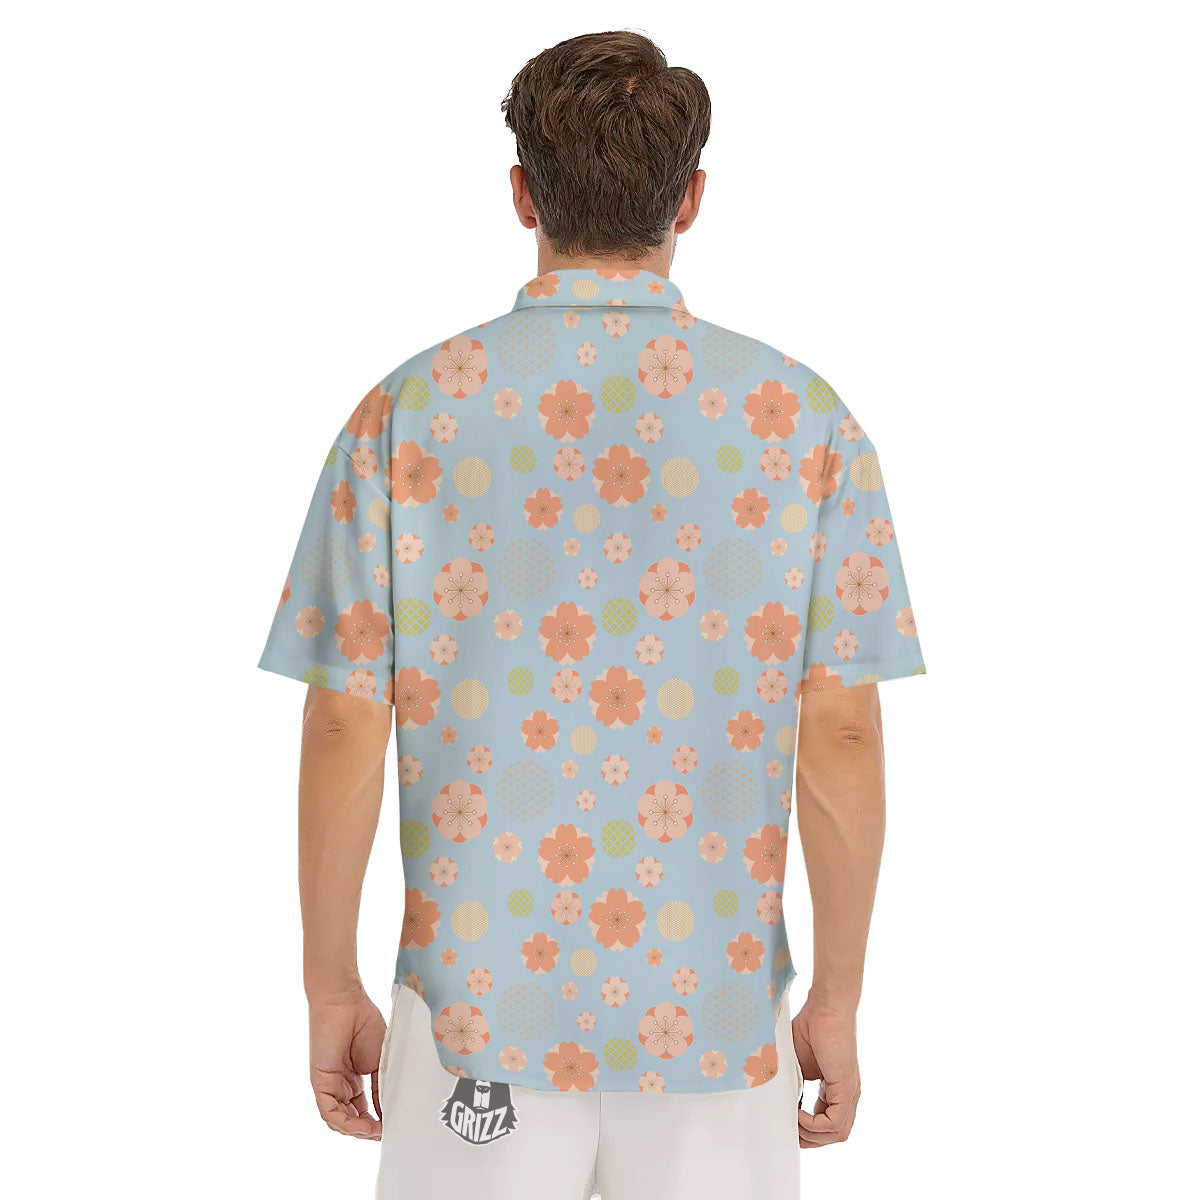 Kimono Cherry Blossom Print Pattern Men's Short Sleeve Shirts